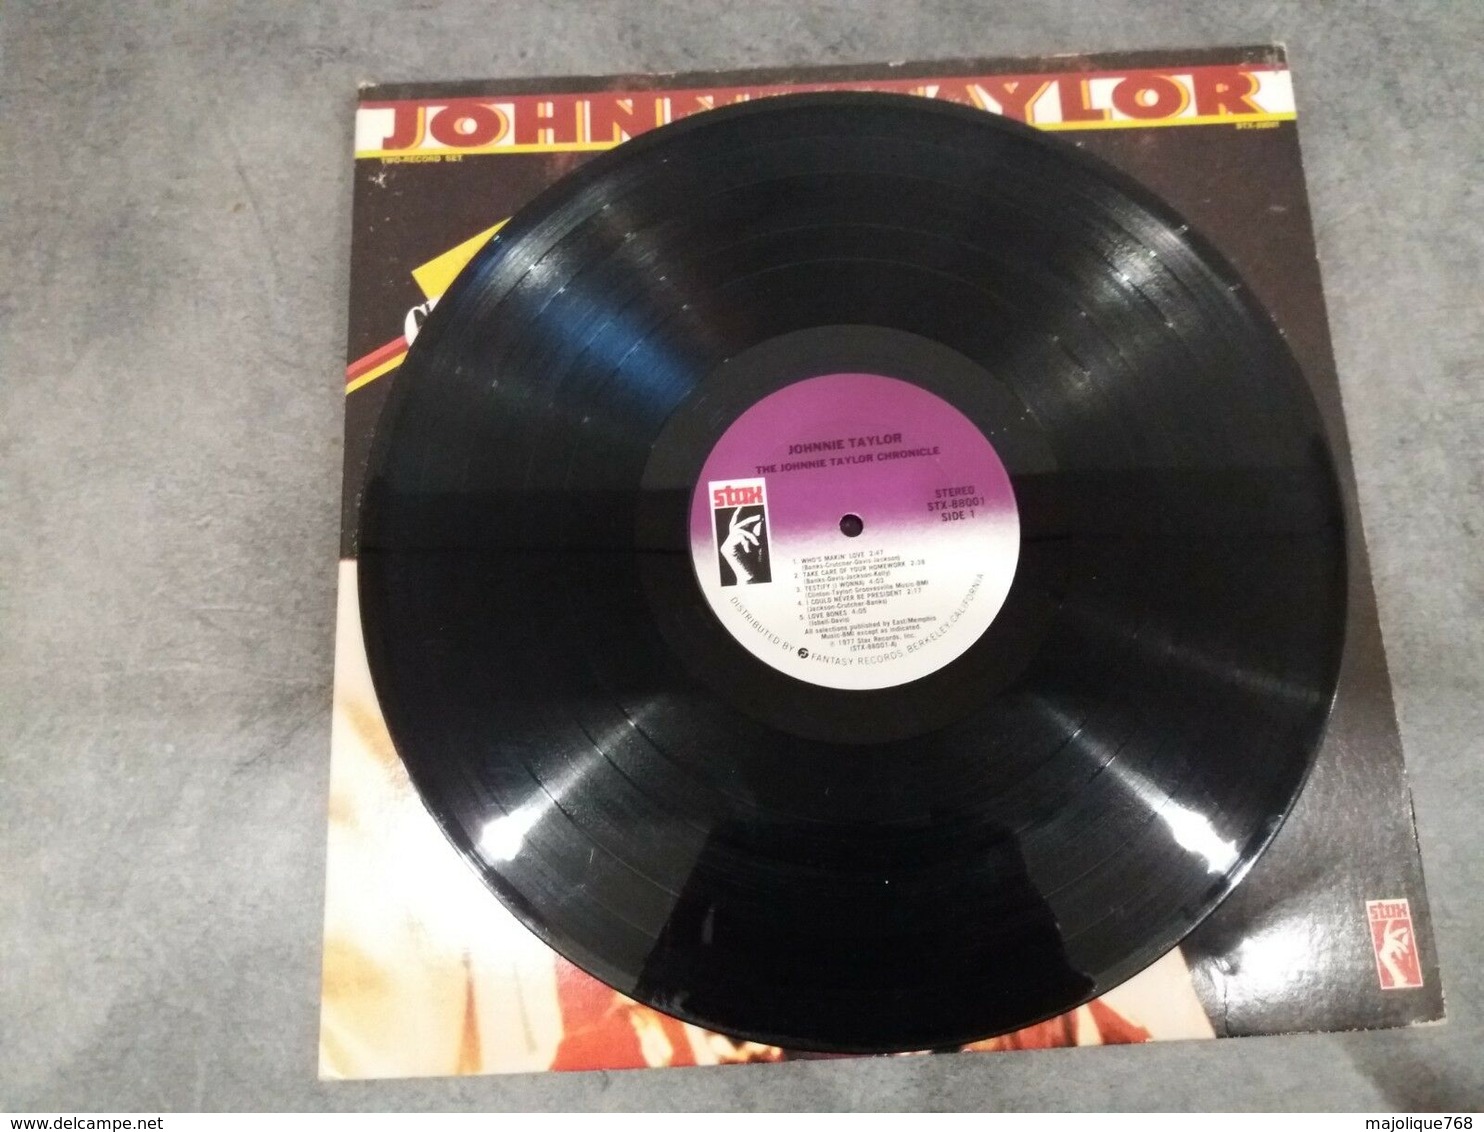 Johnnie Taylor - Chronicle The Twenty Greatest Hits - Stax STX-88001 - 1977  Vinyl LP Original US - Soul - R&B